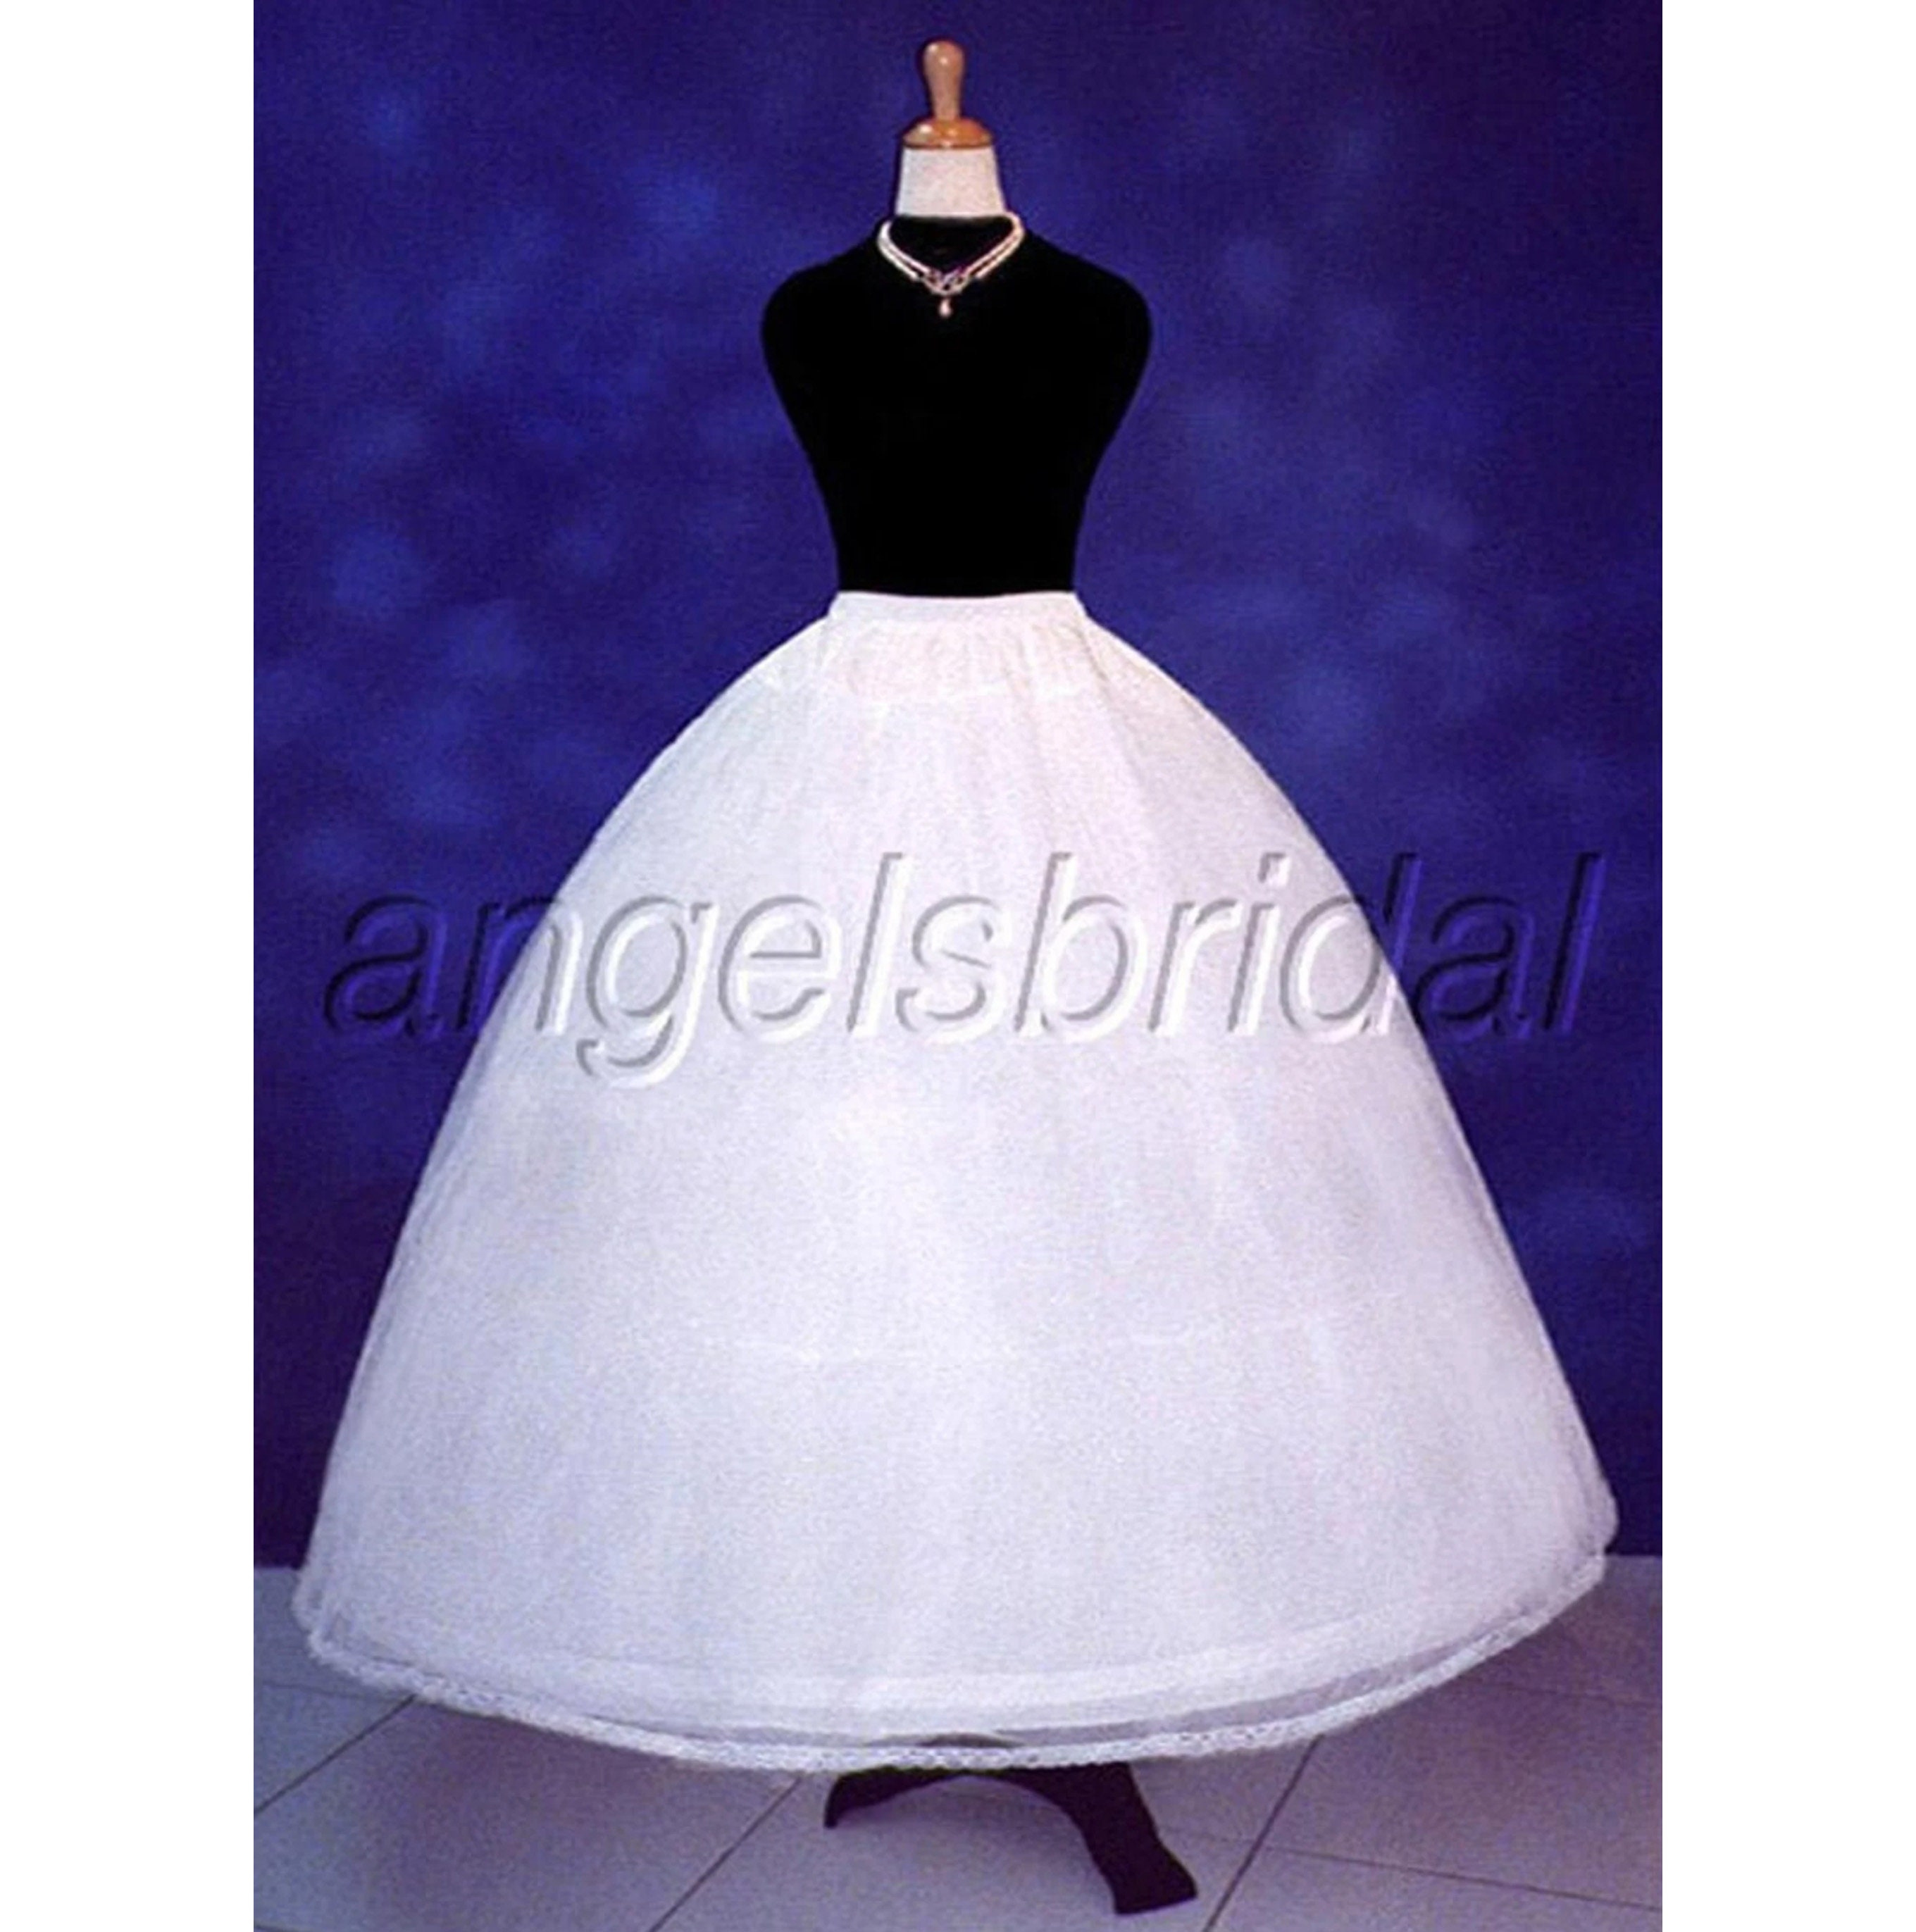 Satin Lycra Adjustable Petticoat for Saree, Underskirt for Dresses